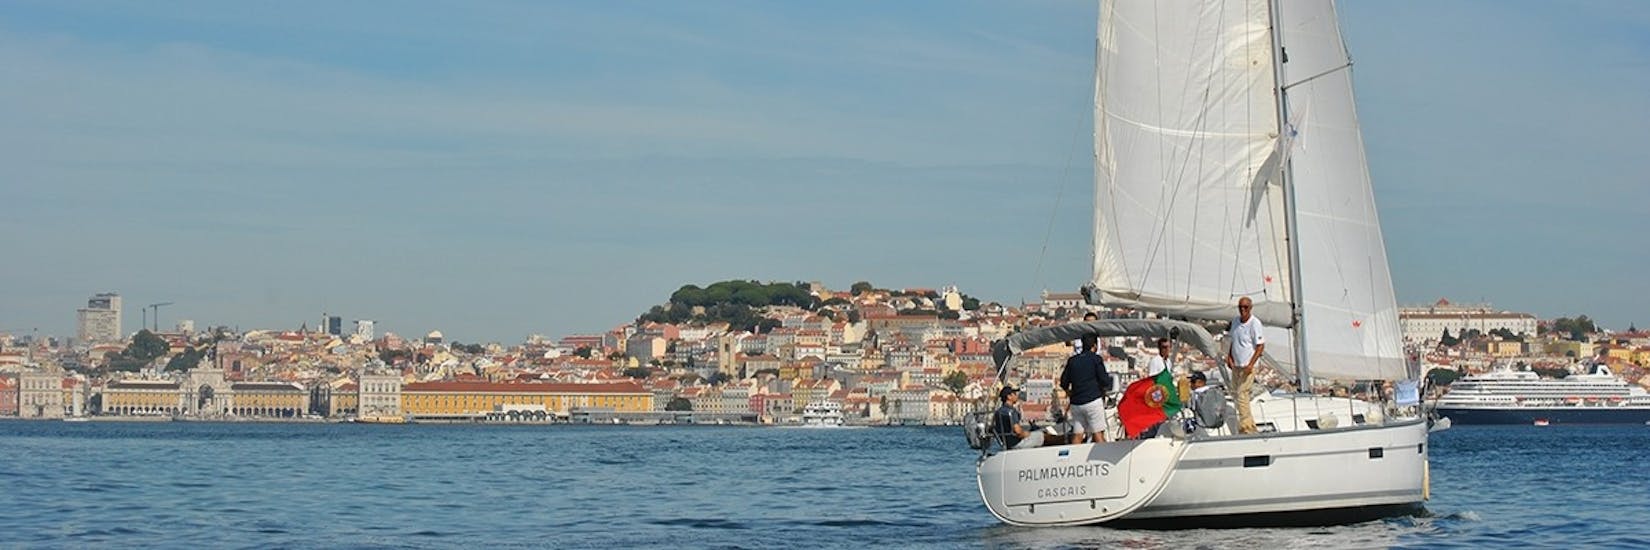 Gita in barca a vela da Doca de Belém a Tago con visita turistica.